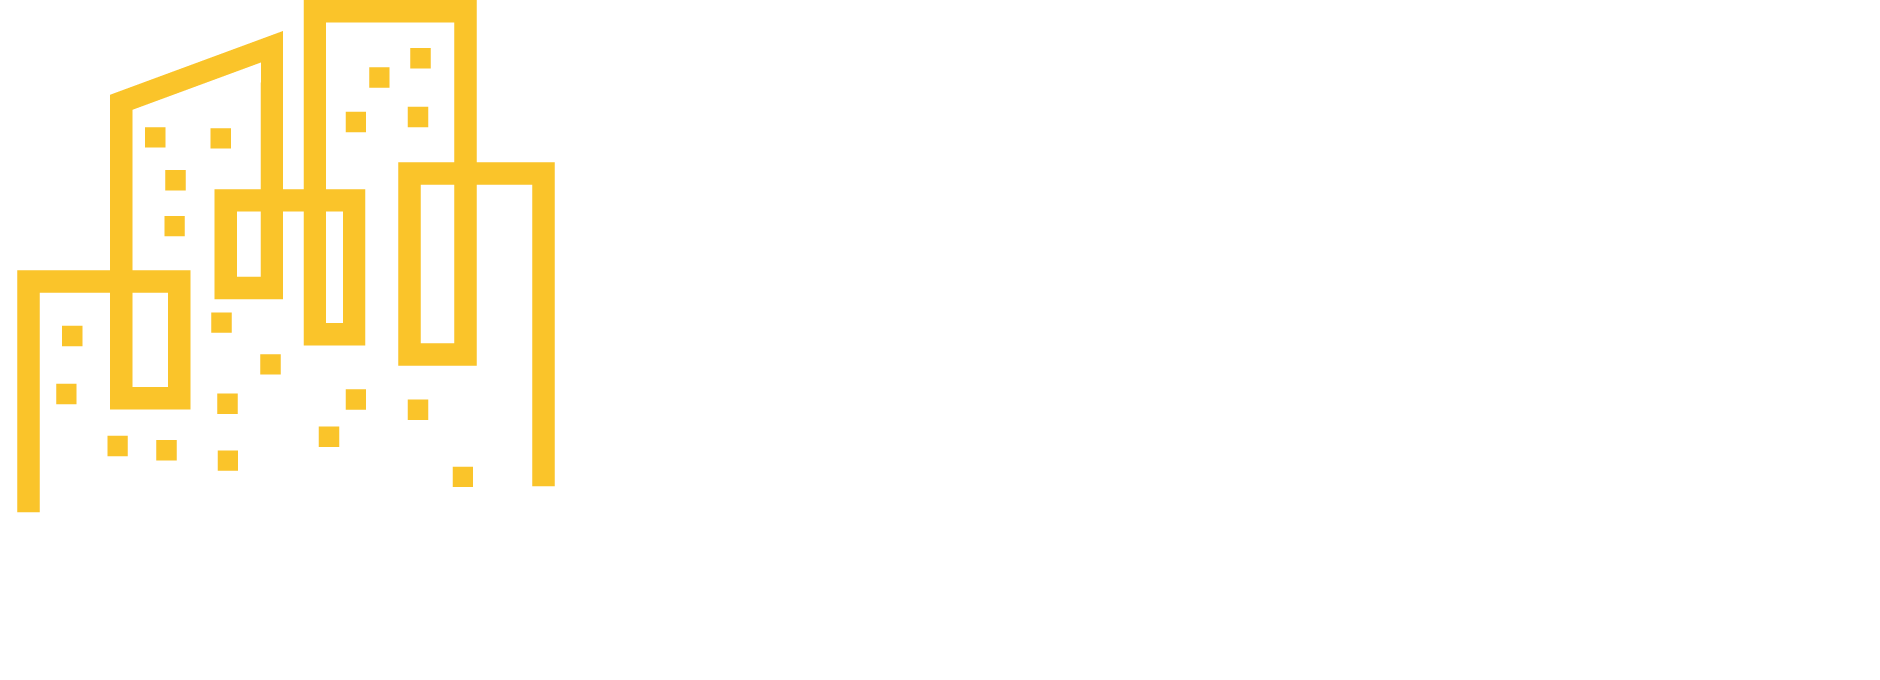 Derby SLU header logo - select to go home